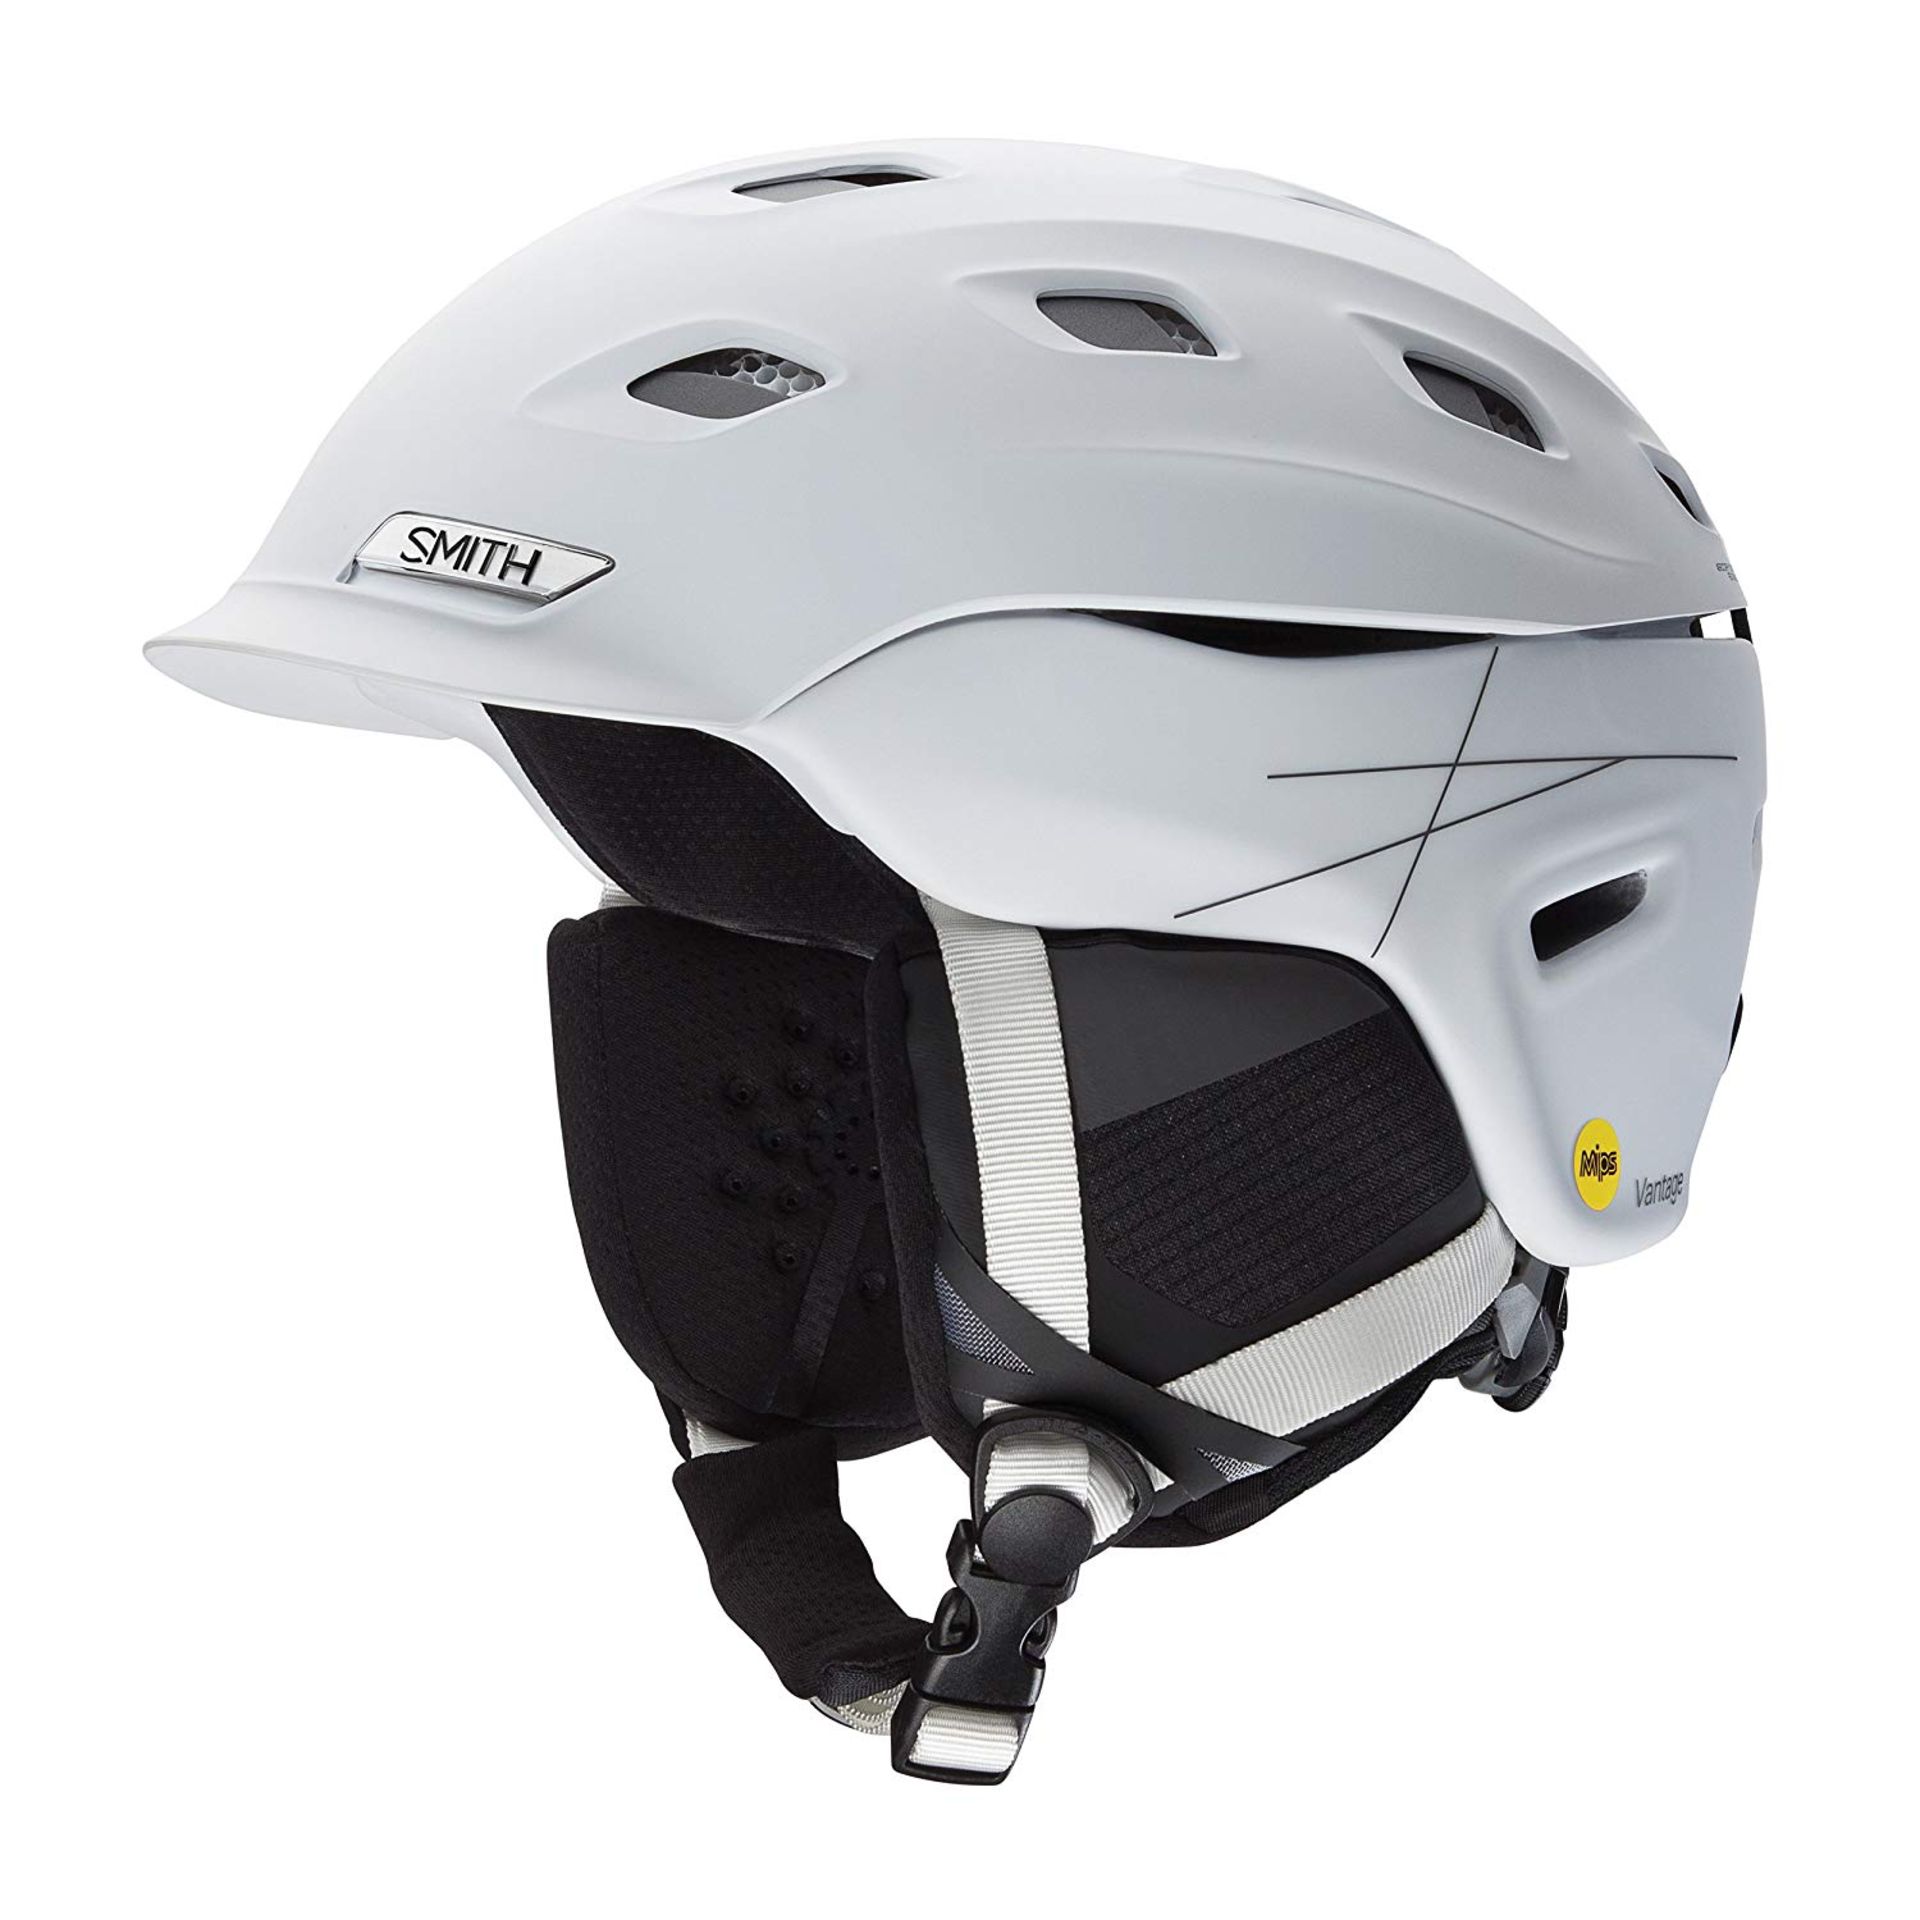 Brand new Smith Lightweight Vantage Ski Helmet - Large RRP £179.99